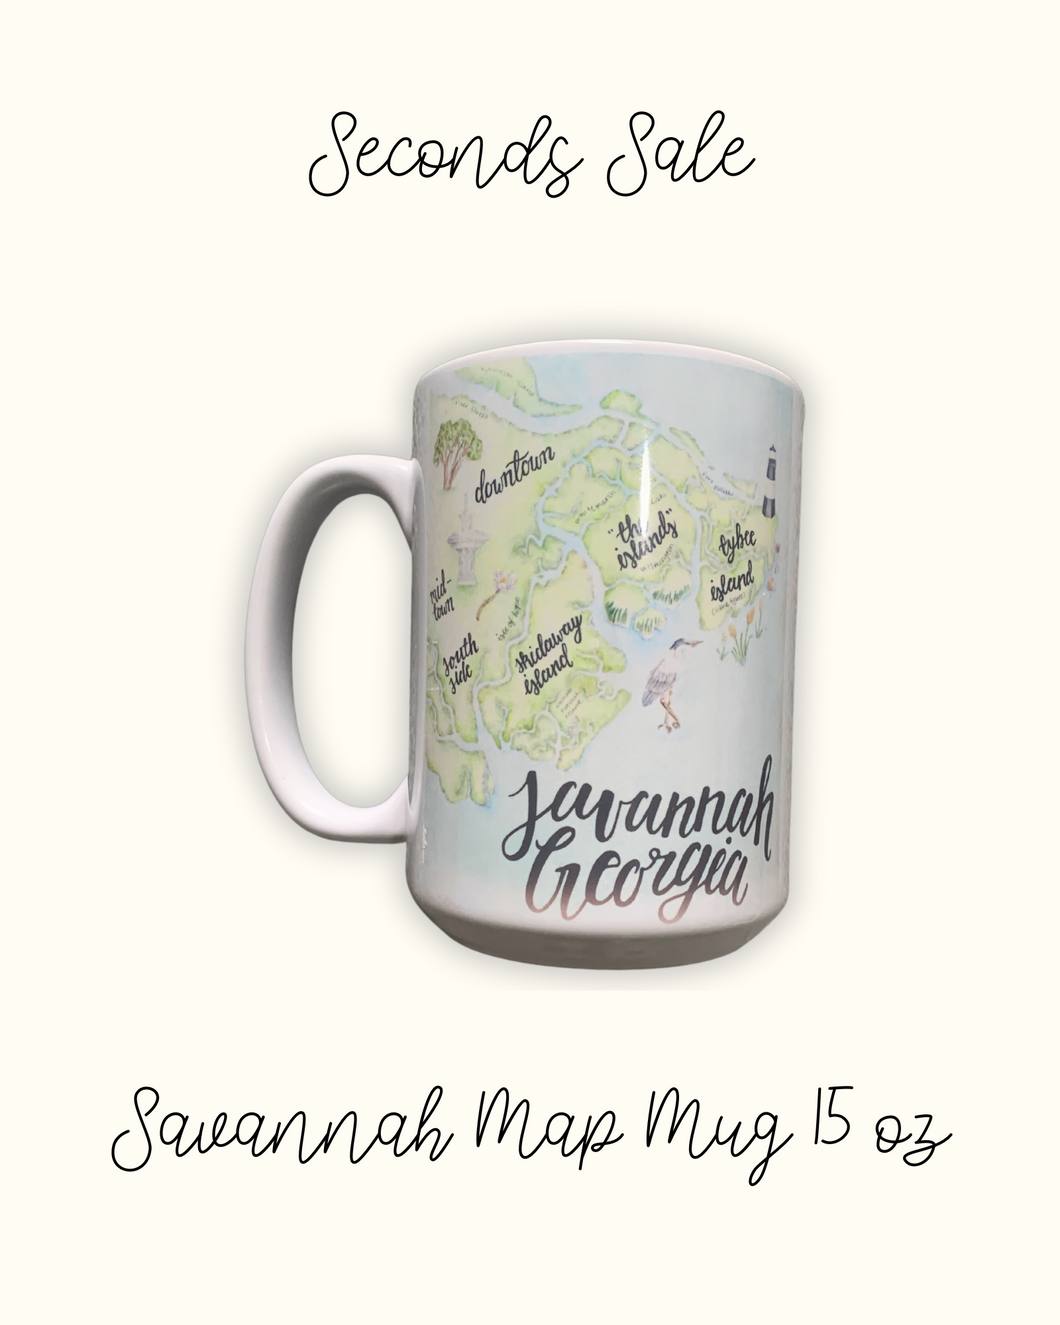 Savannah Map 15 oz mug - Seconds Sale